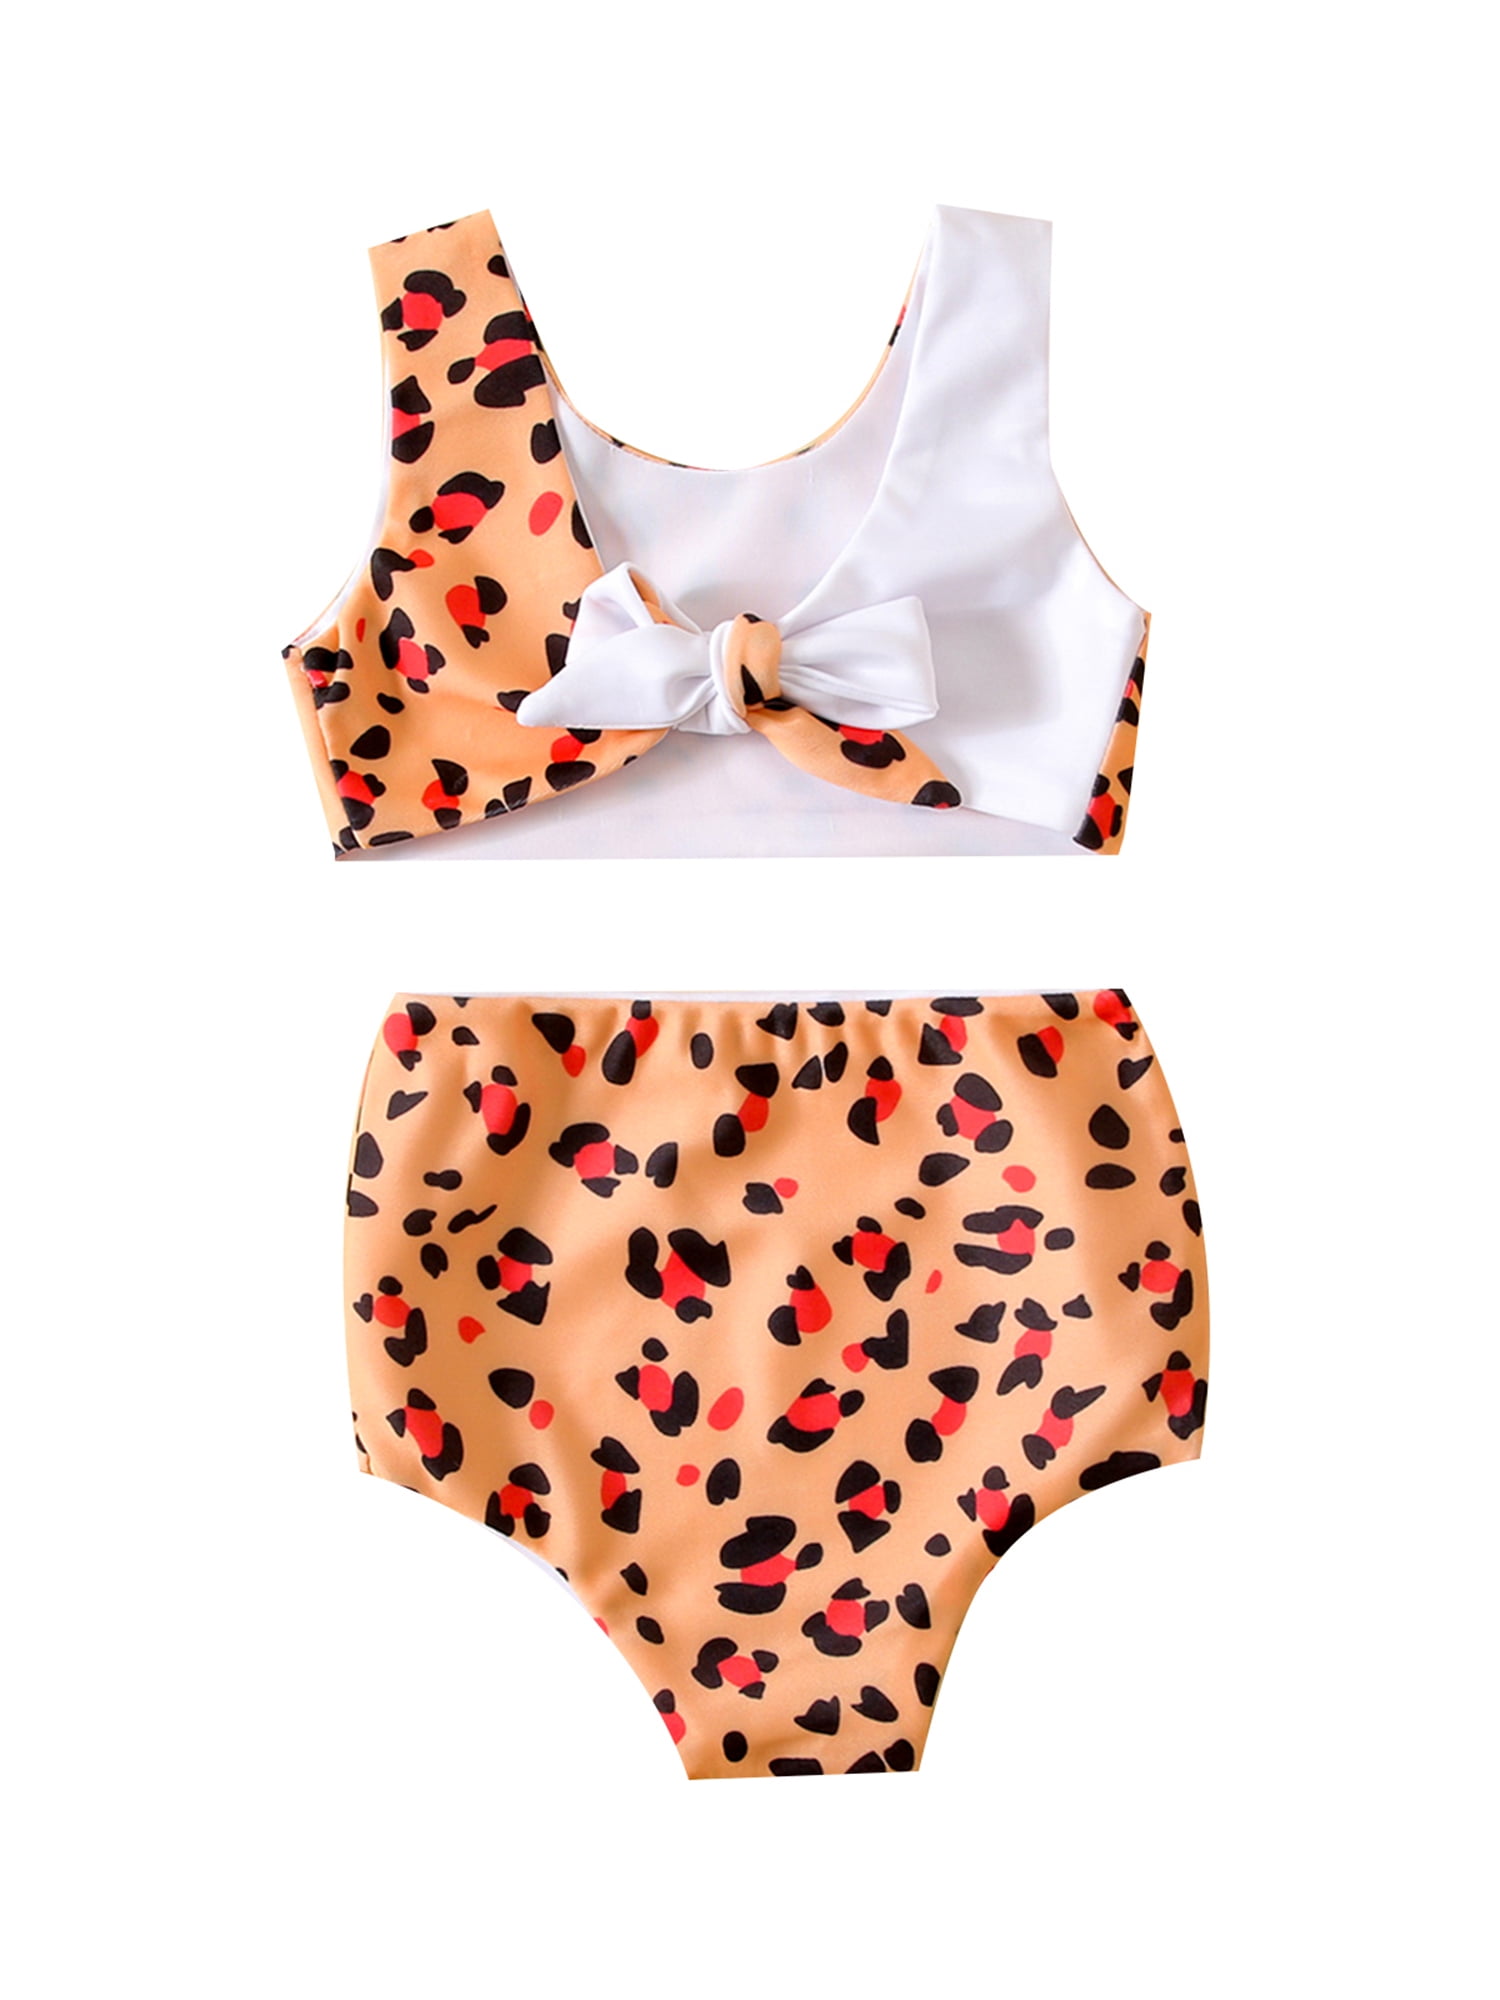 Straps Bathing Suit for Toddler Girl Leopard Bikini Beachwear Swimming Suit xkwyshop Toddler Girl Swimsuit 2 Piece Swimwear 